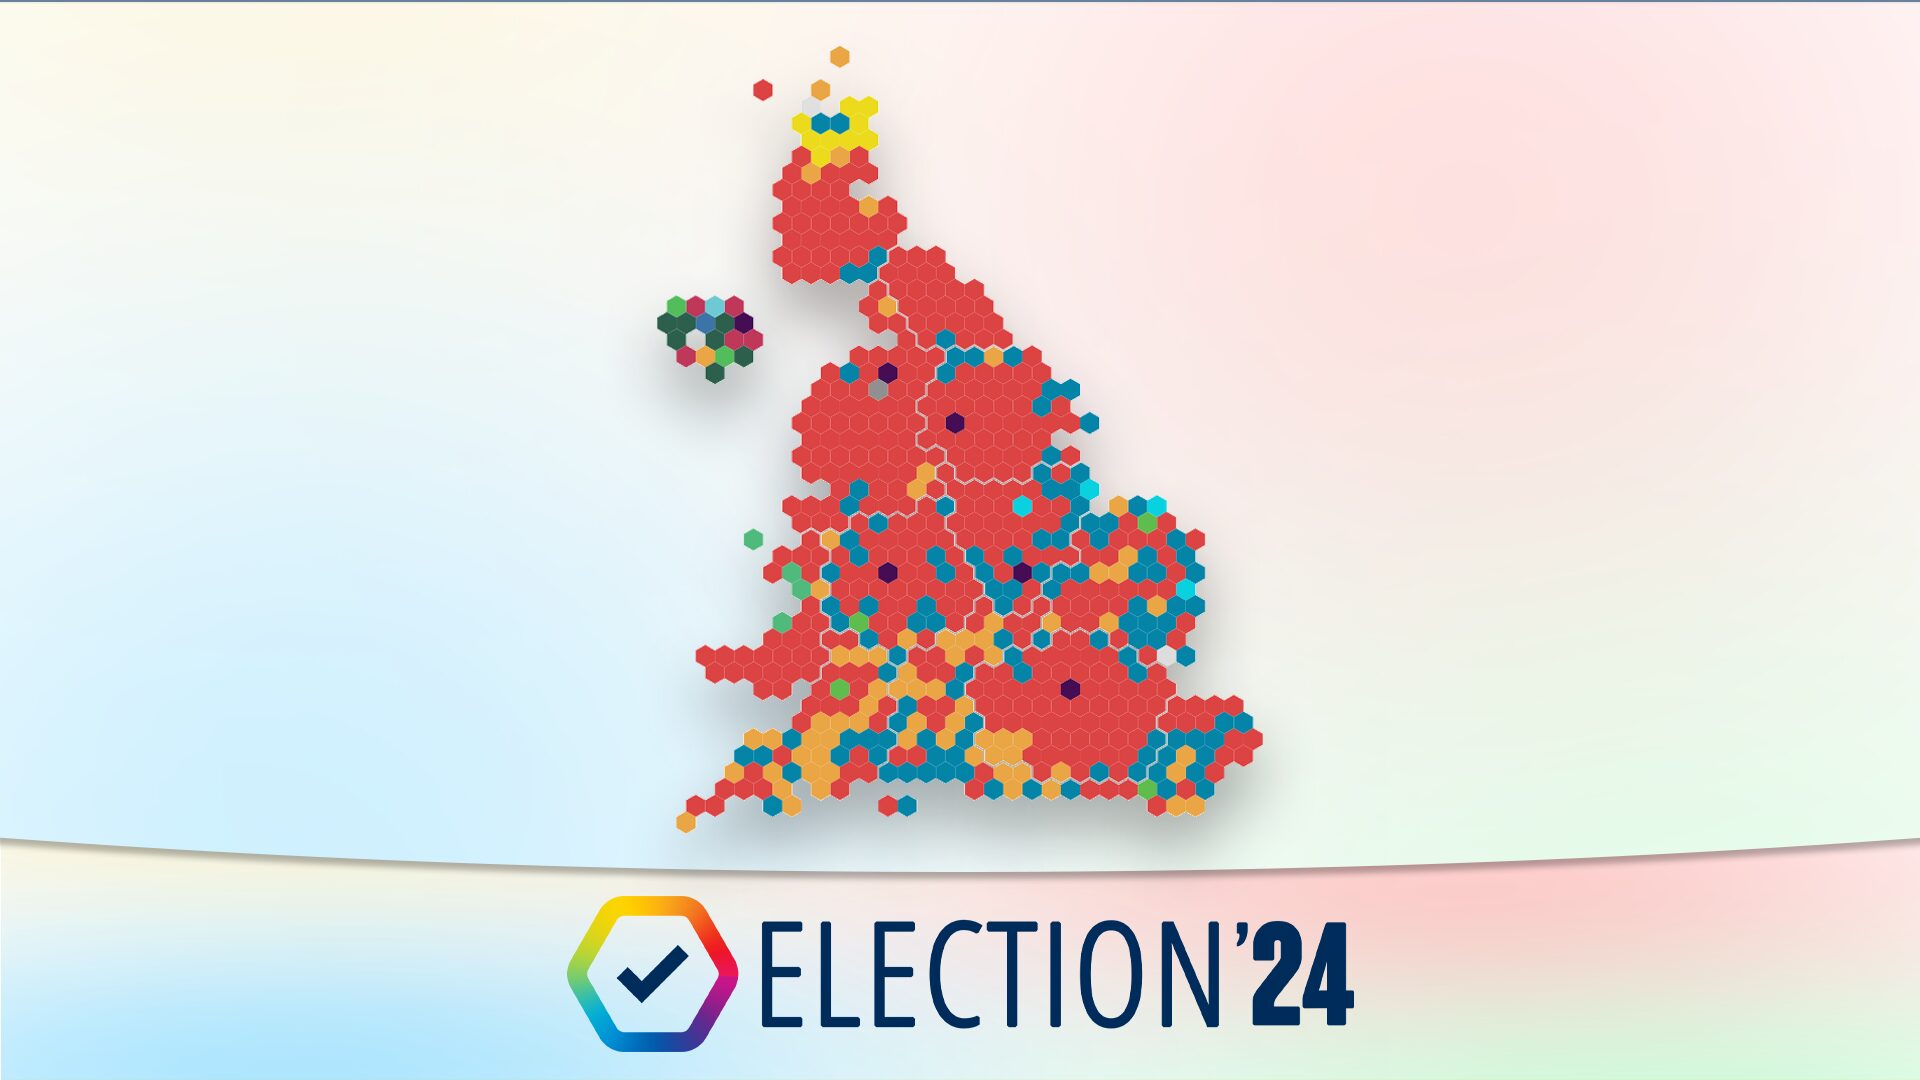 Election 24 hex map showing Labour landslide (2/650 seats left to declare)